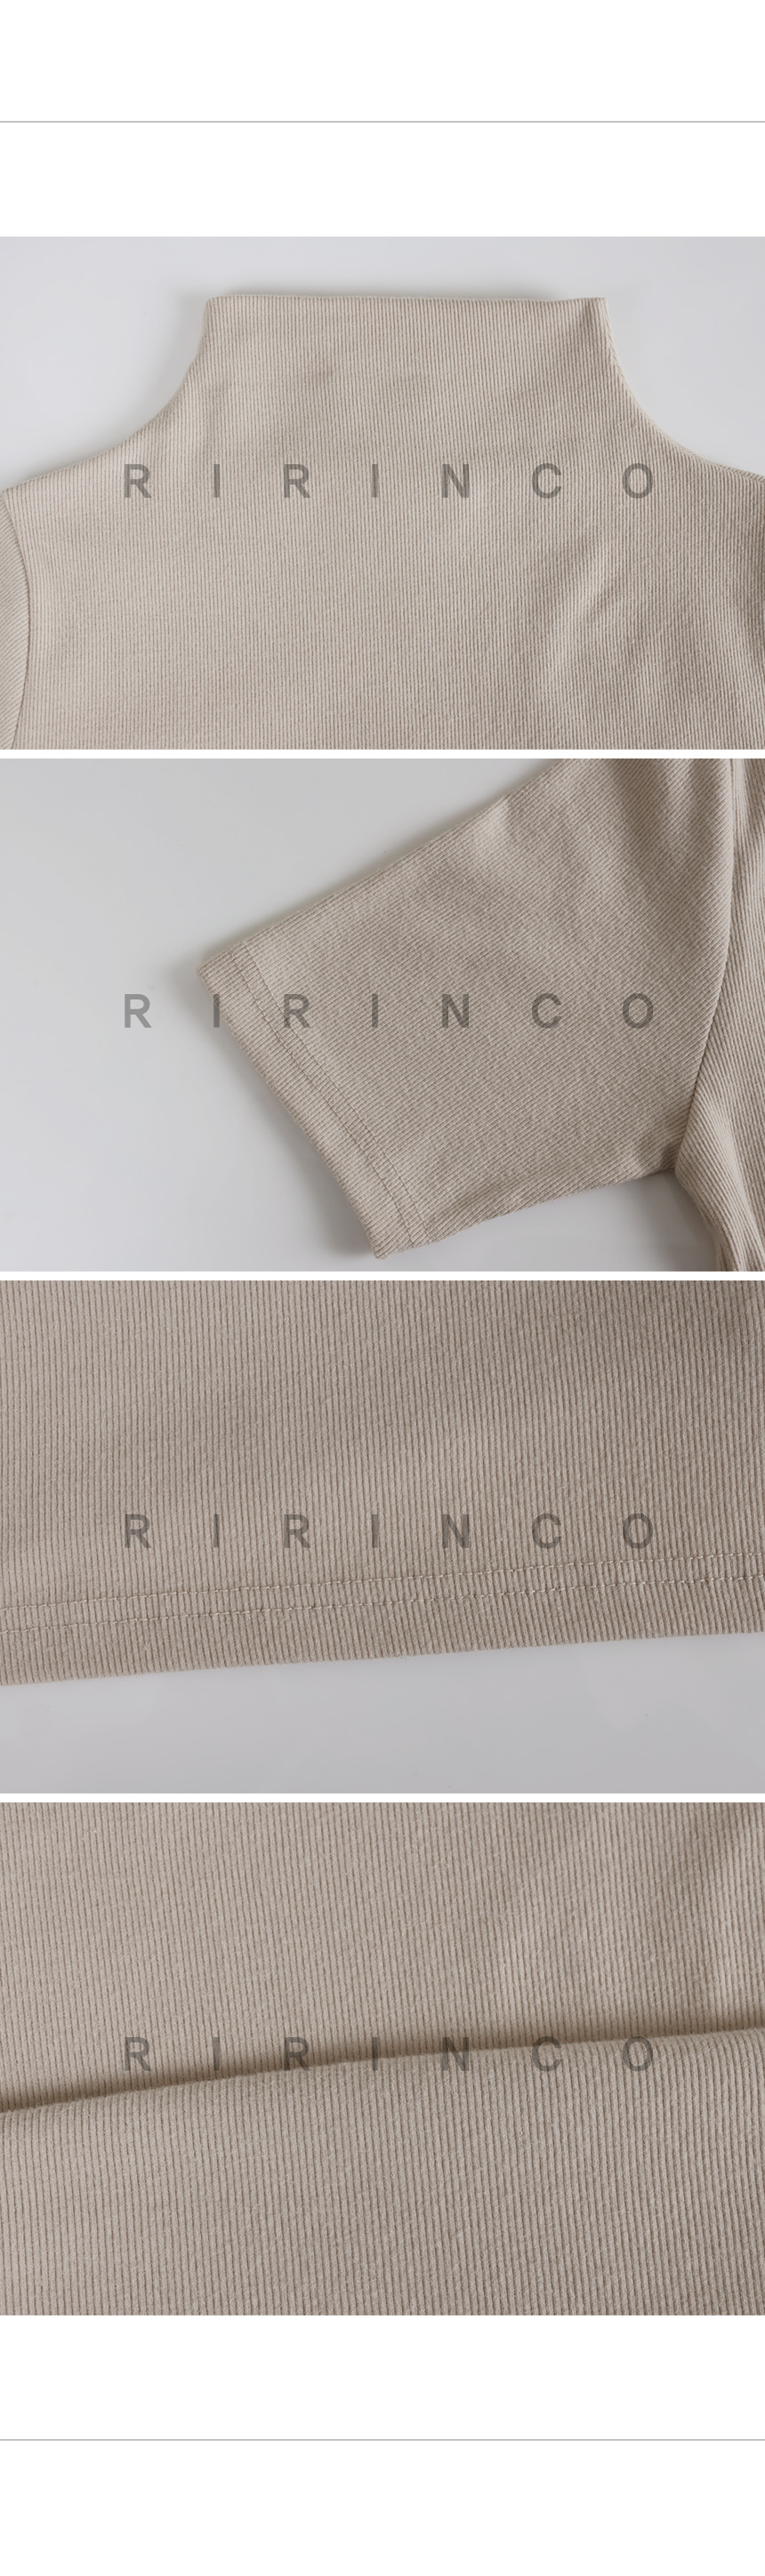 RIRINCO 表起毛ハーフネックリブ半袖Tシャツ